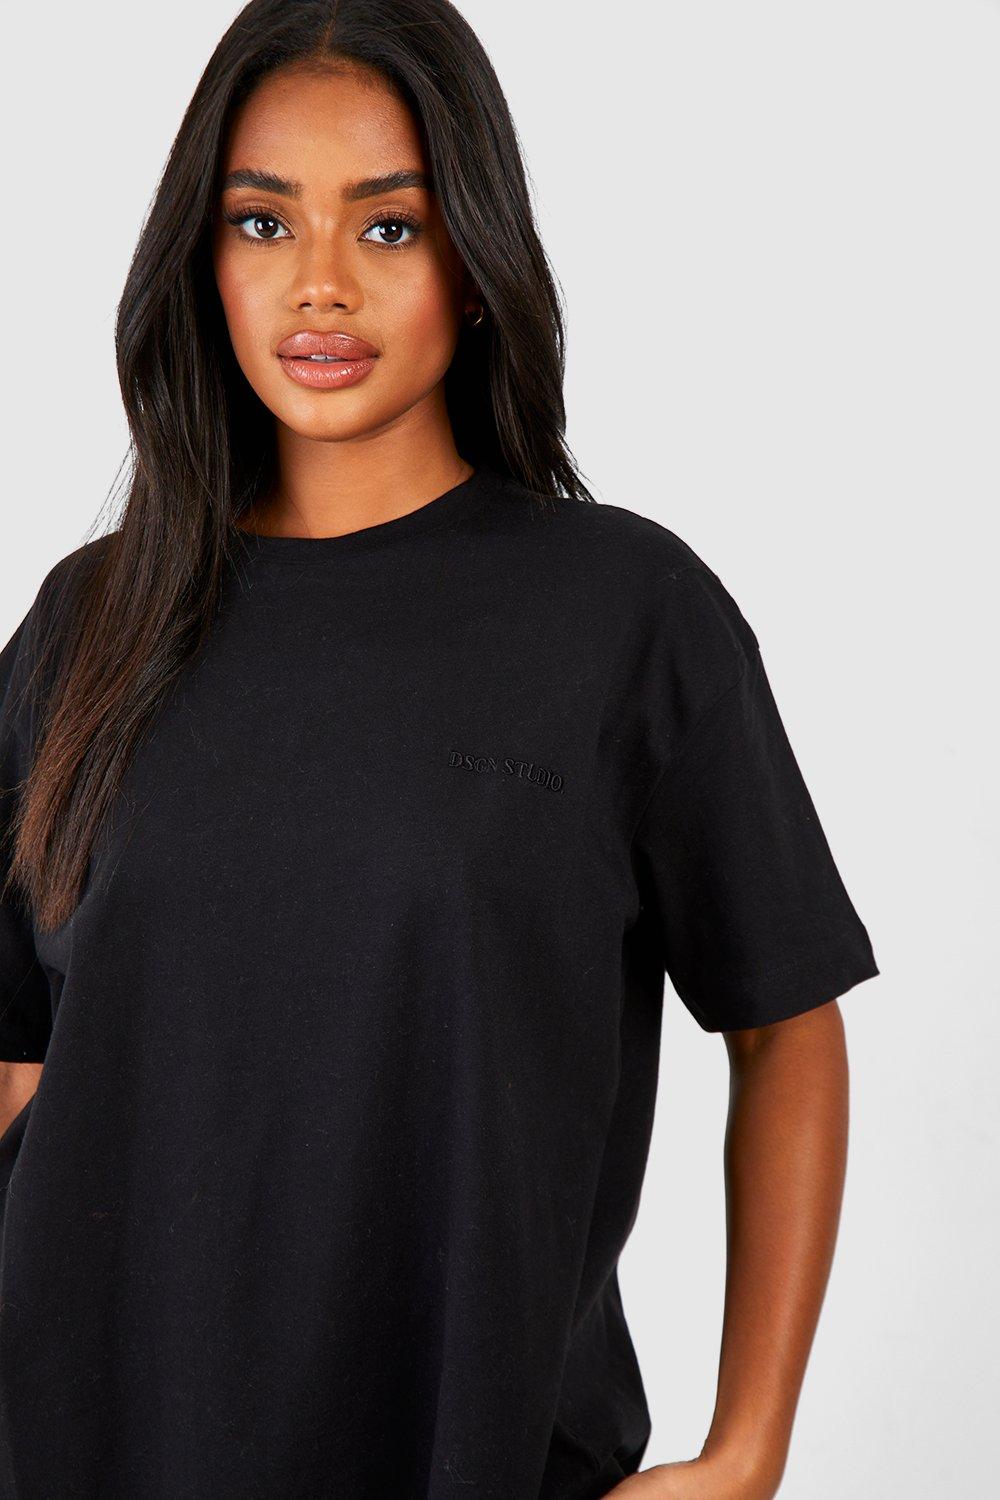 Women Full Length Solid T-Shirt Set With Leggings Black Small Black Small 